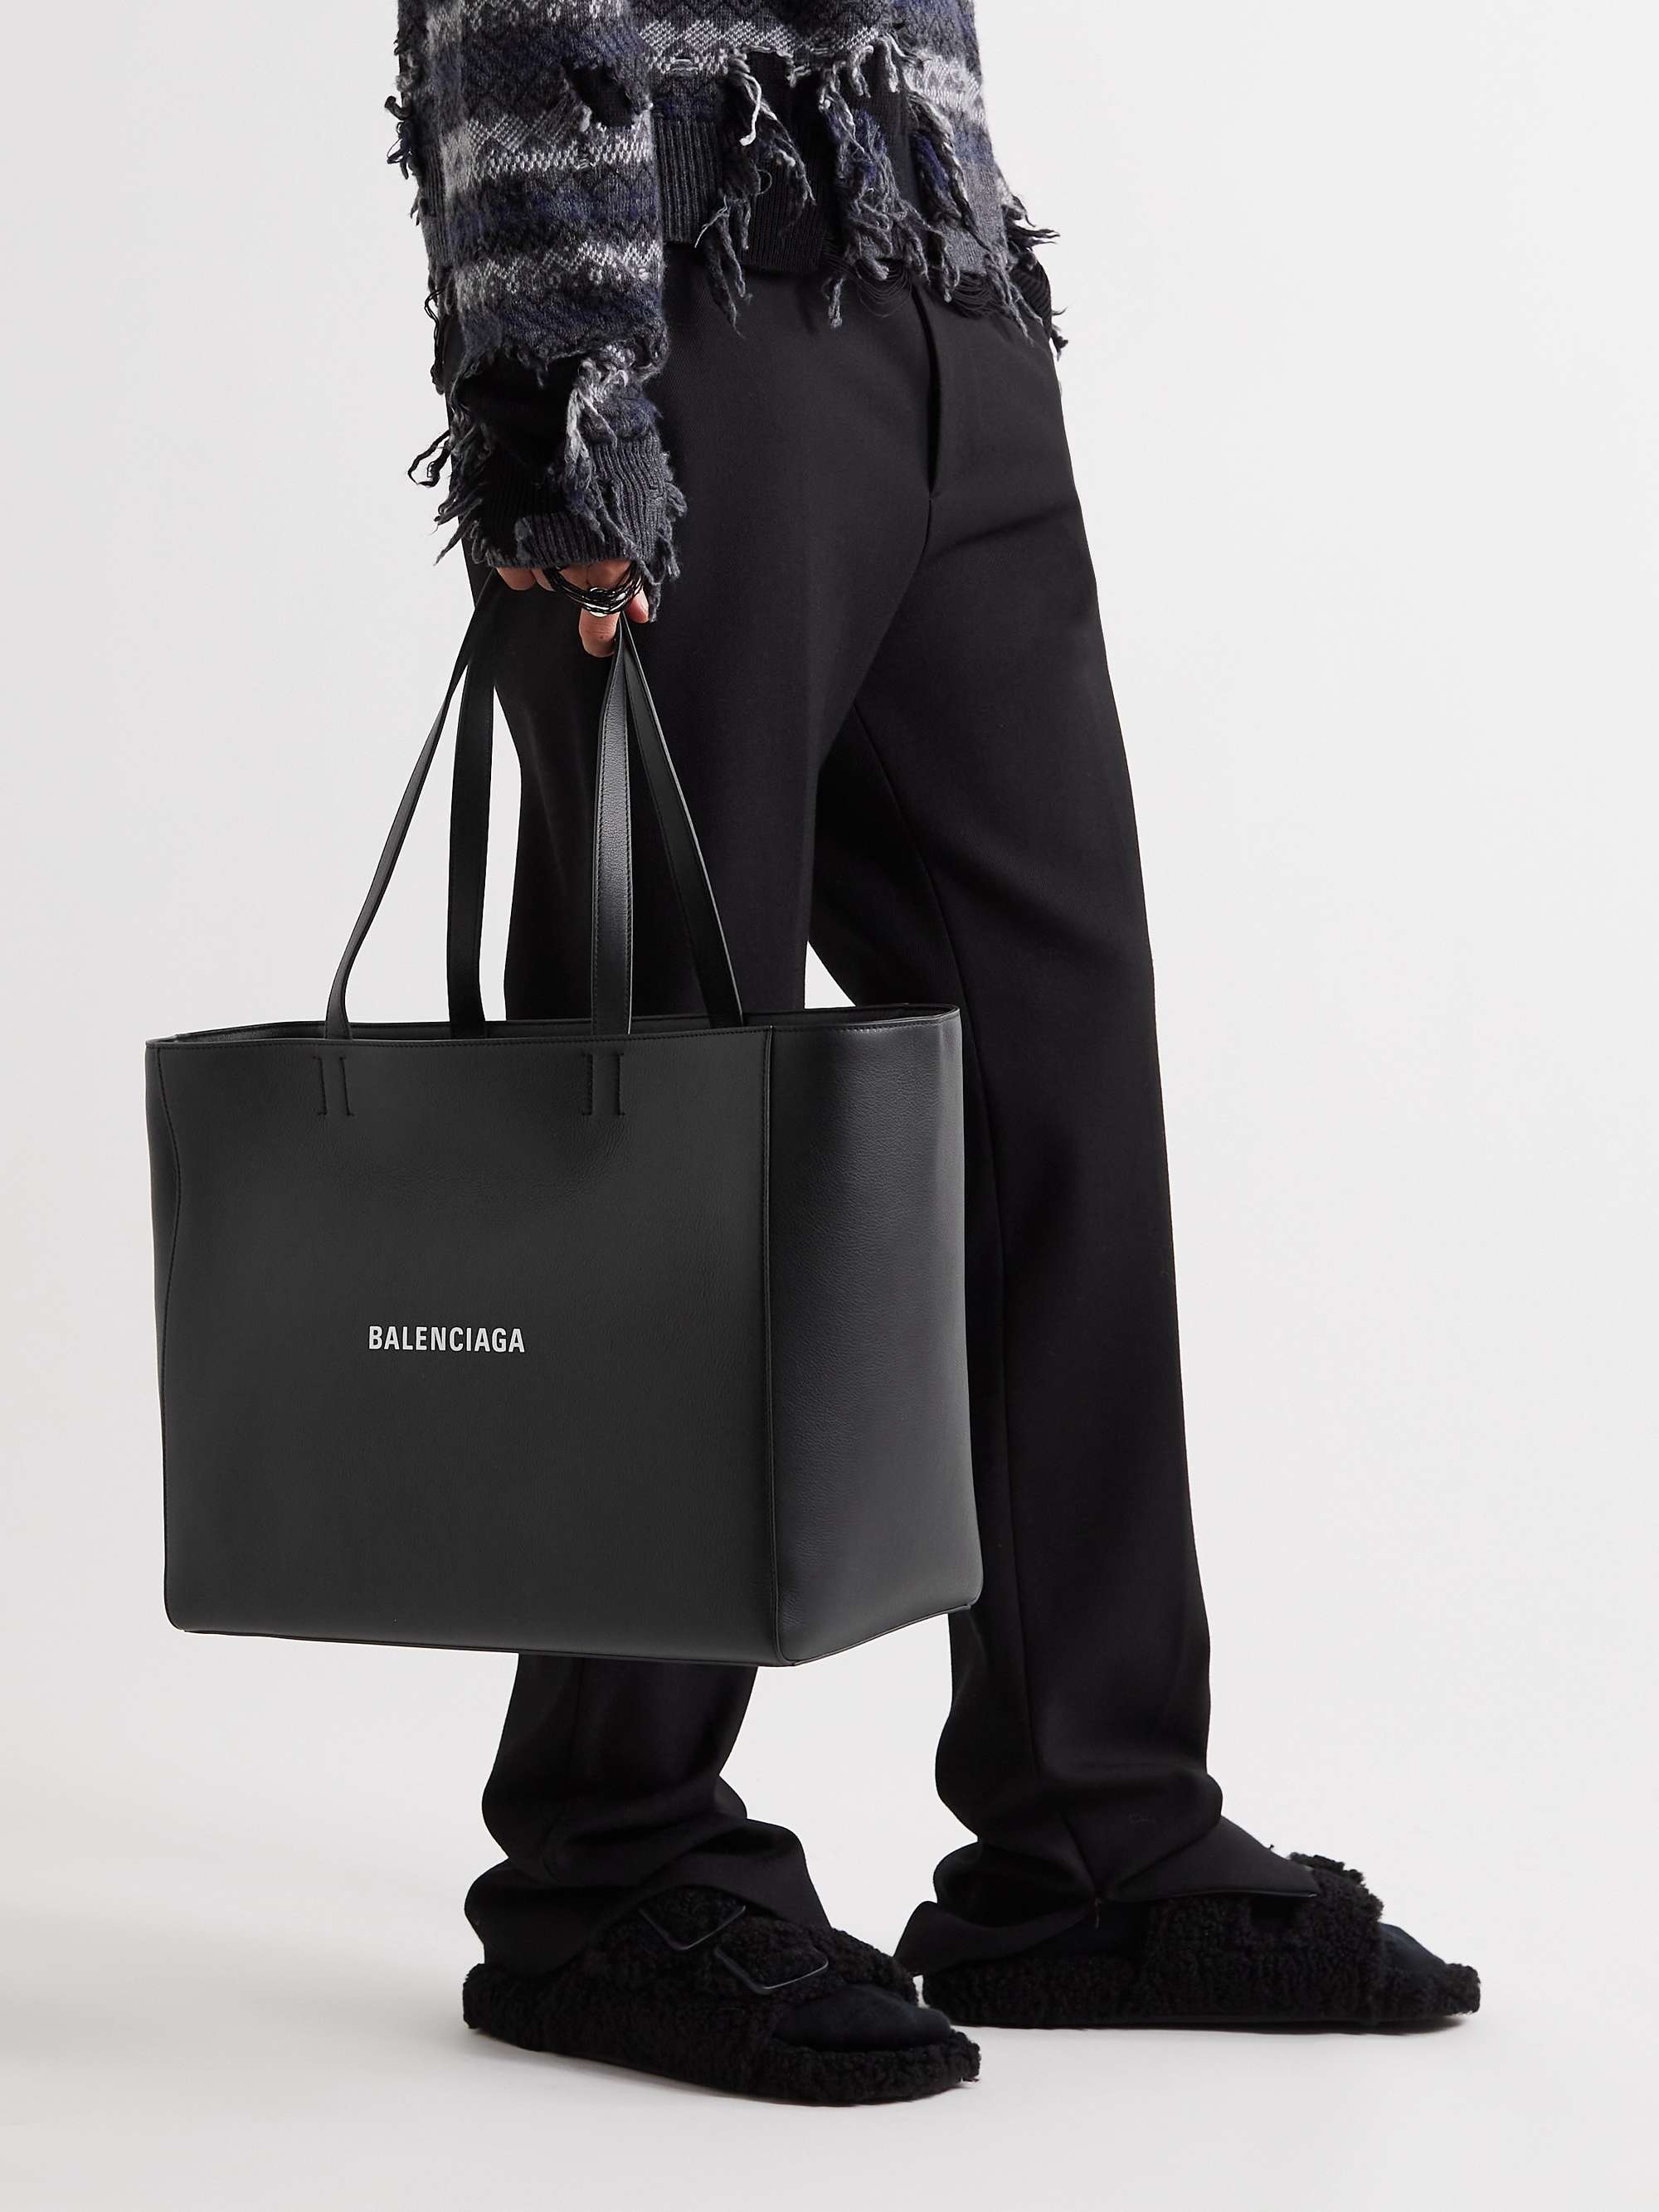 BALENCIAGA Logo-Print Leather Tote Bag for Men | MR PORTER